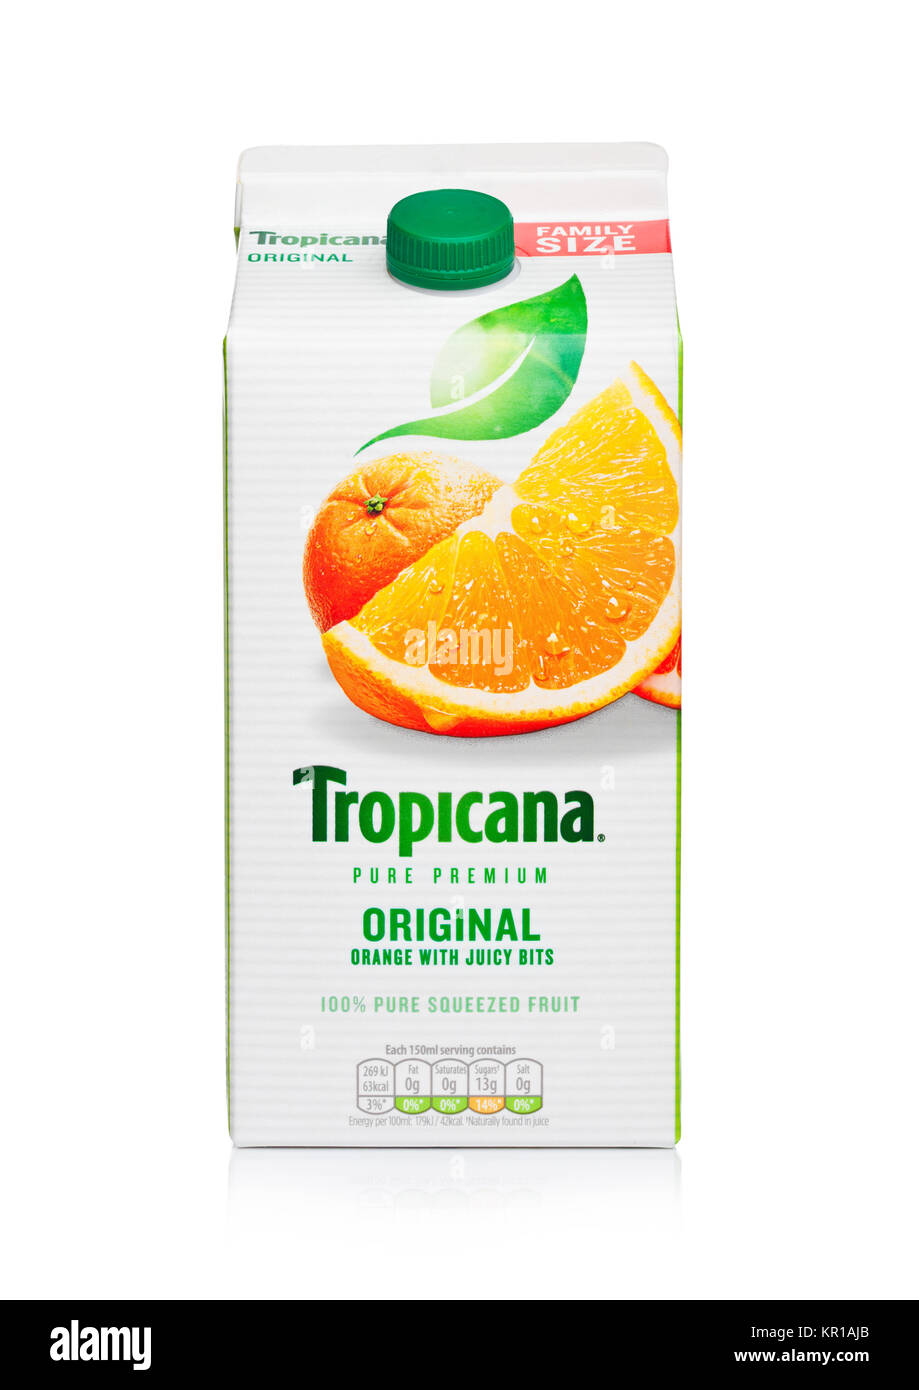 https://c8.alamy.com/comp/KR1AJB/london-uk-december-15-2017-family-pack-of-fresh-tropicana-orange-juice-KR1AJB.jpg